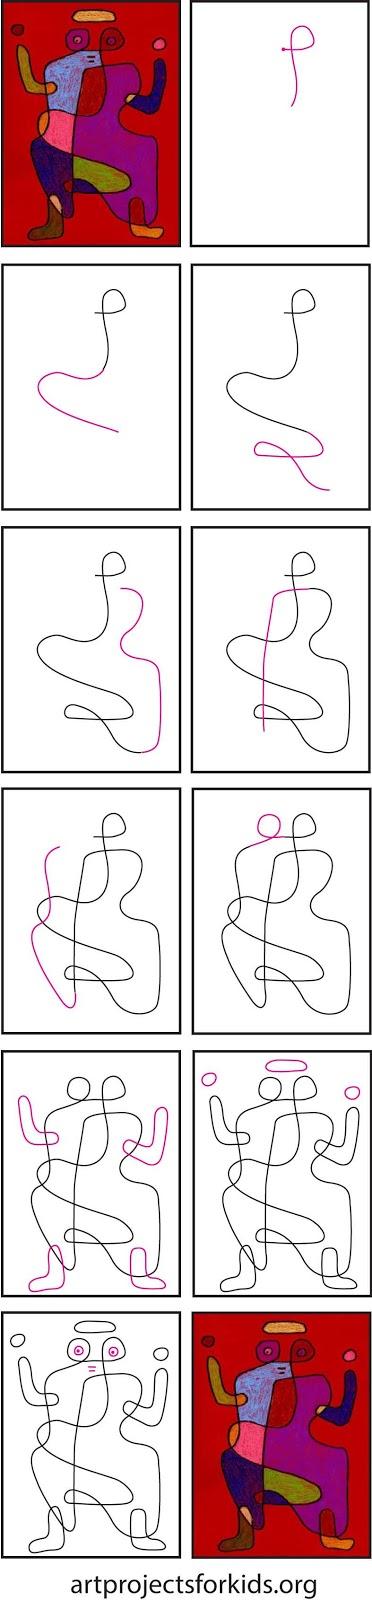 How To Draw Like Paul Klee